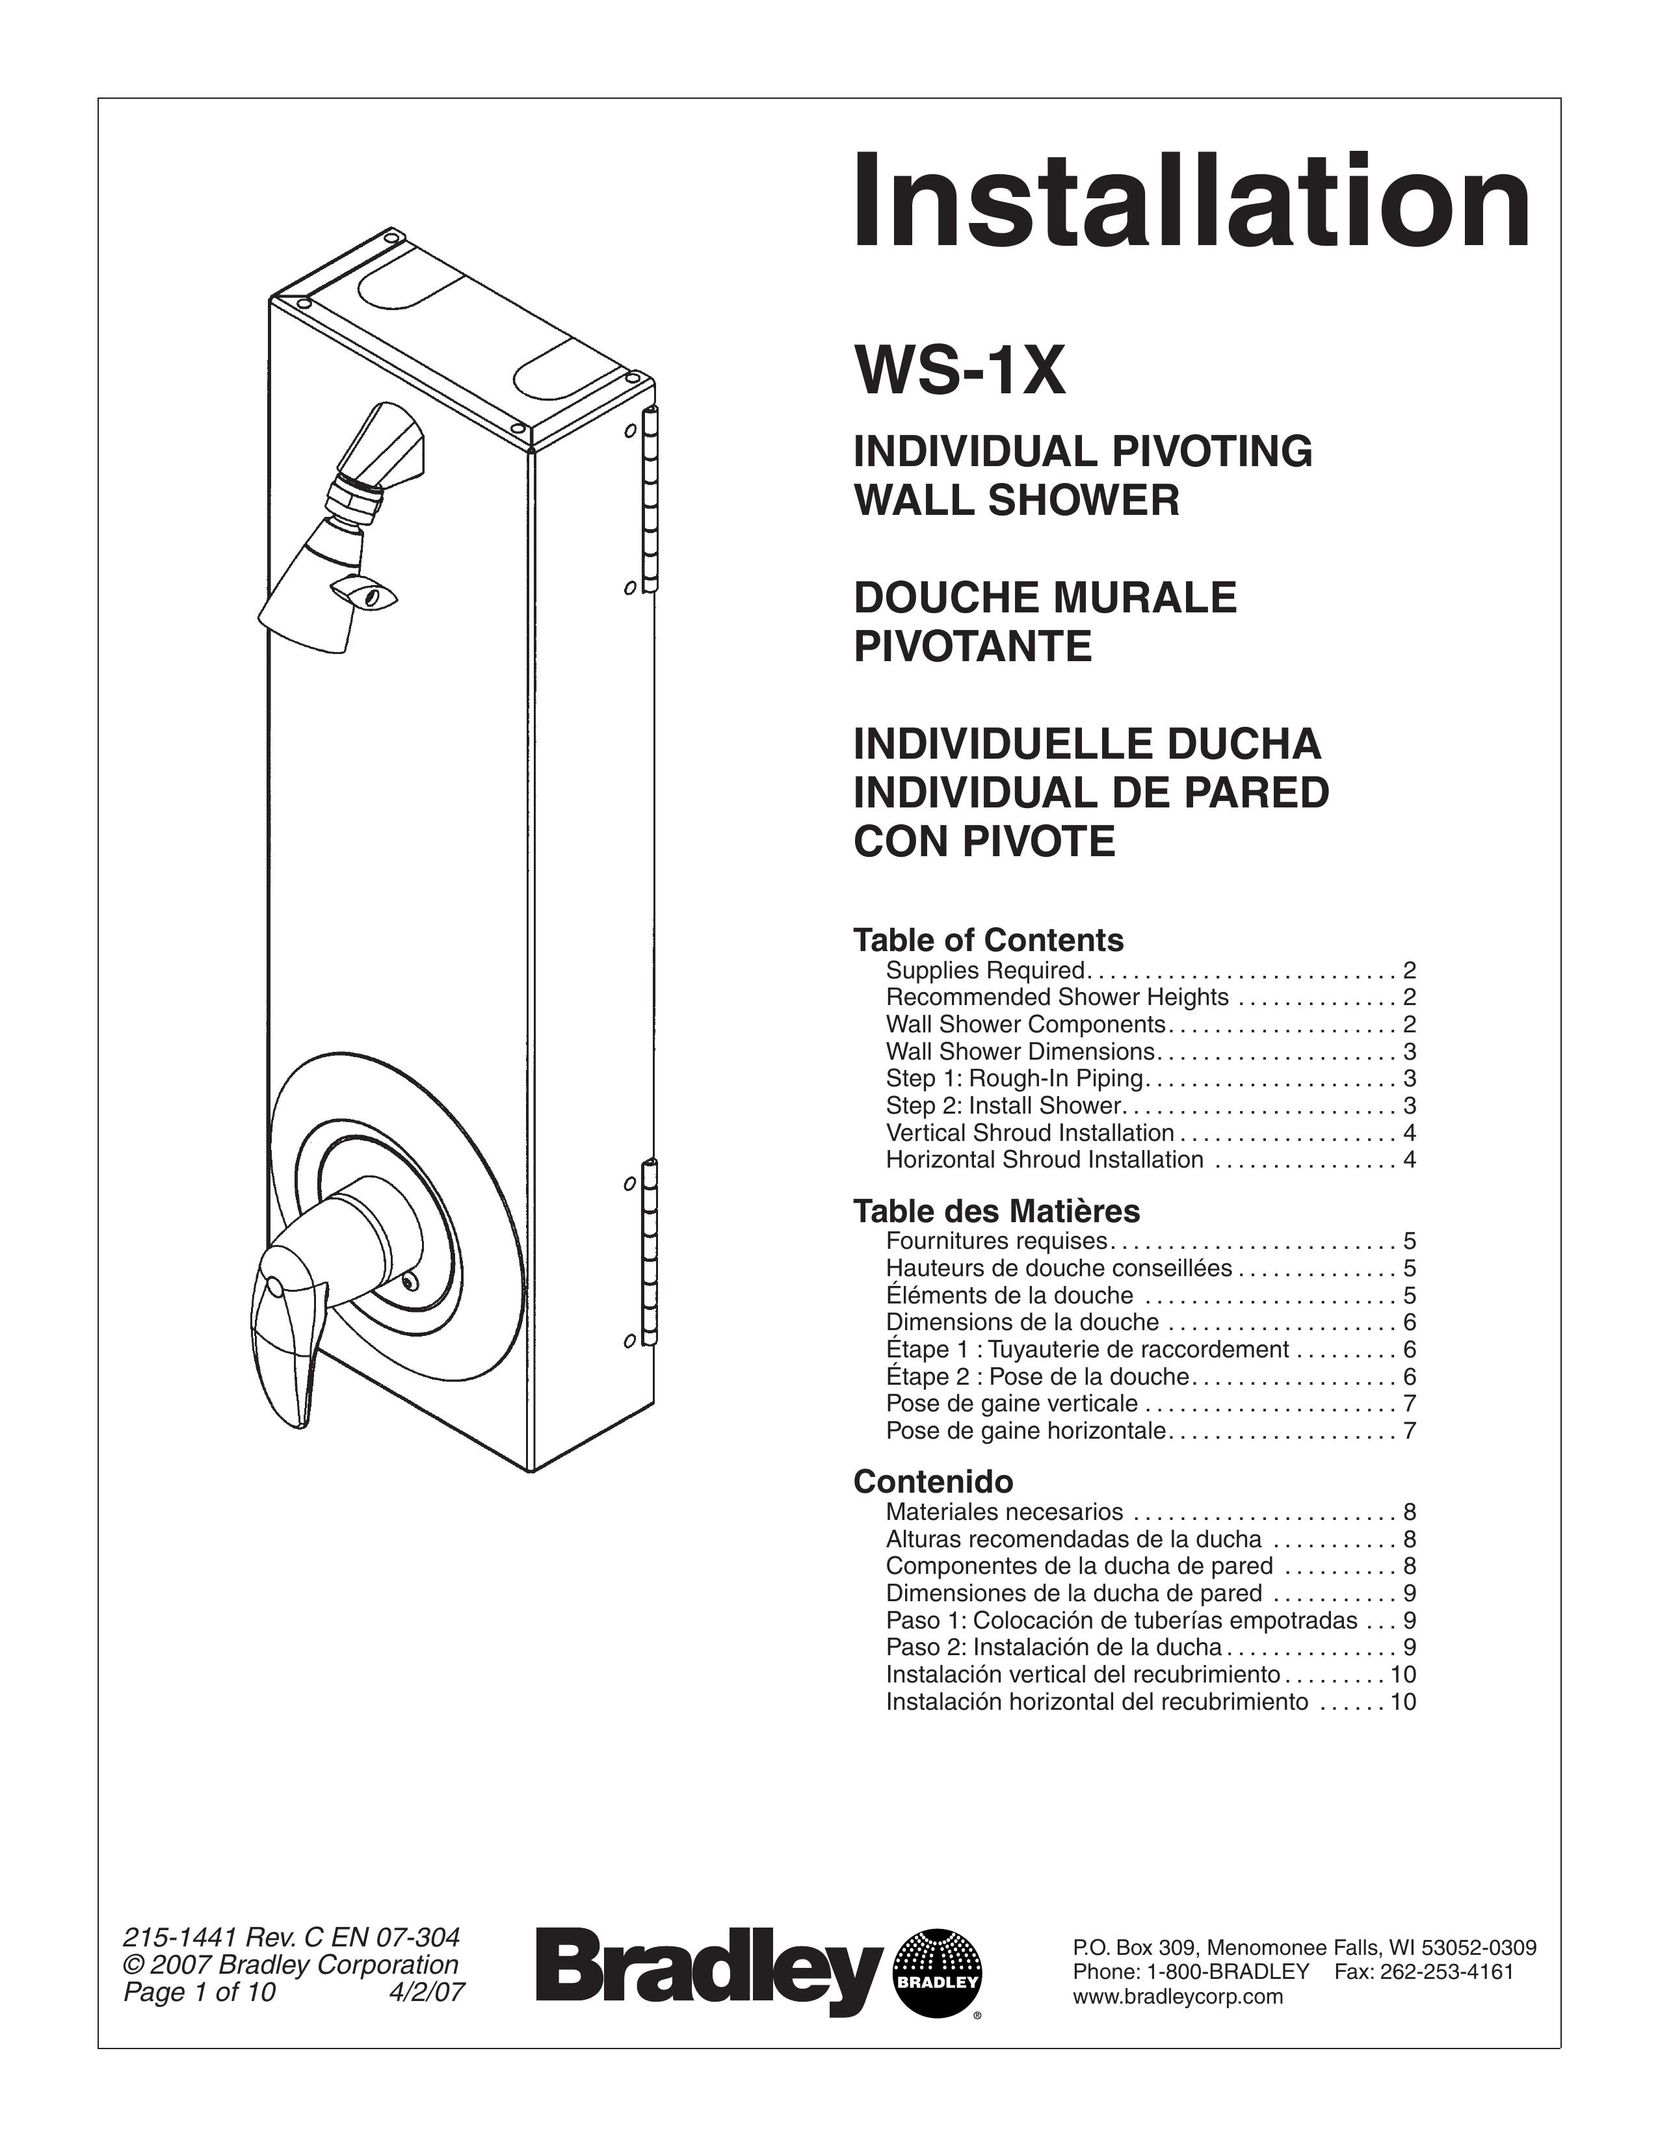 Bradley Smoker WS-1X Plumbing Product User Manual